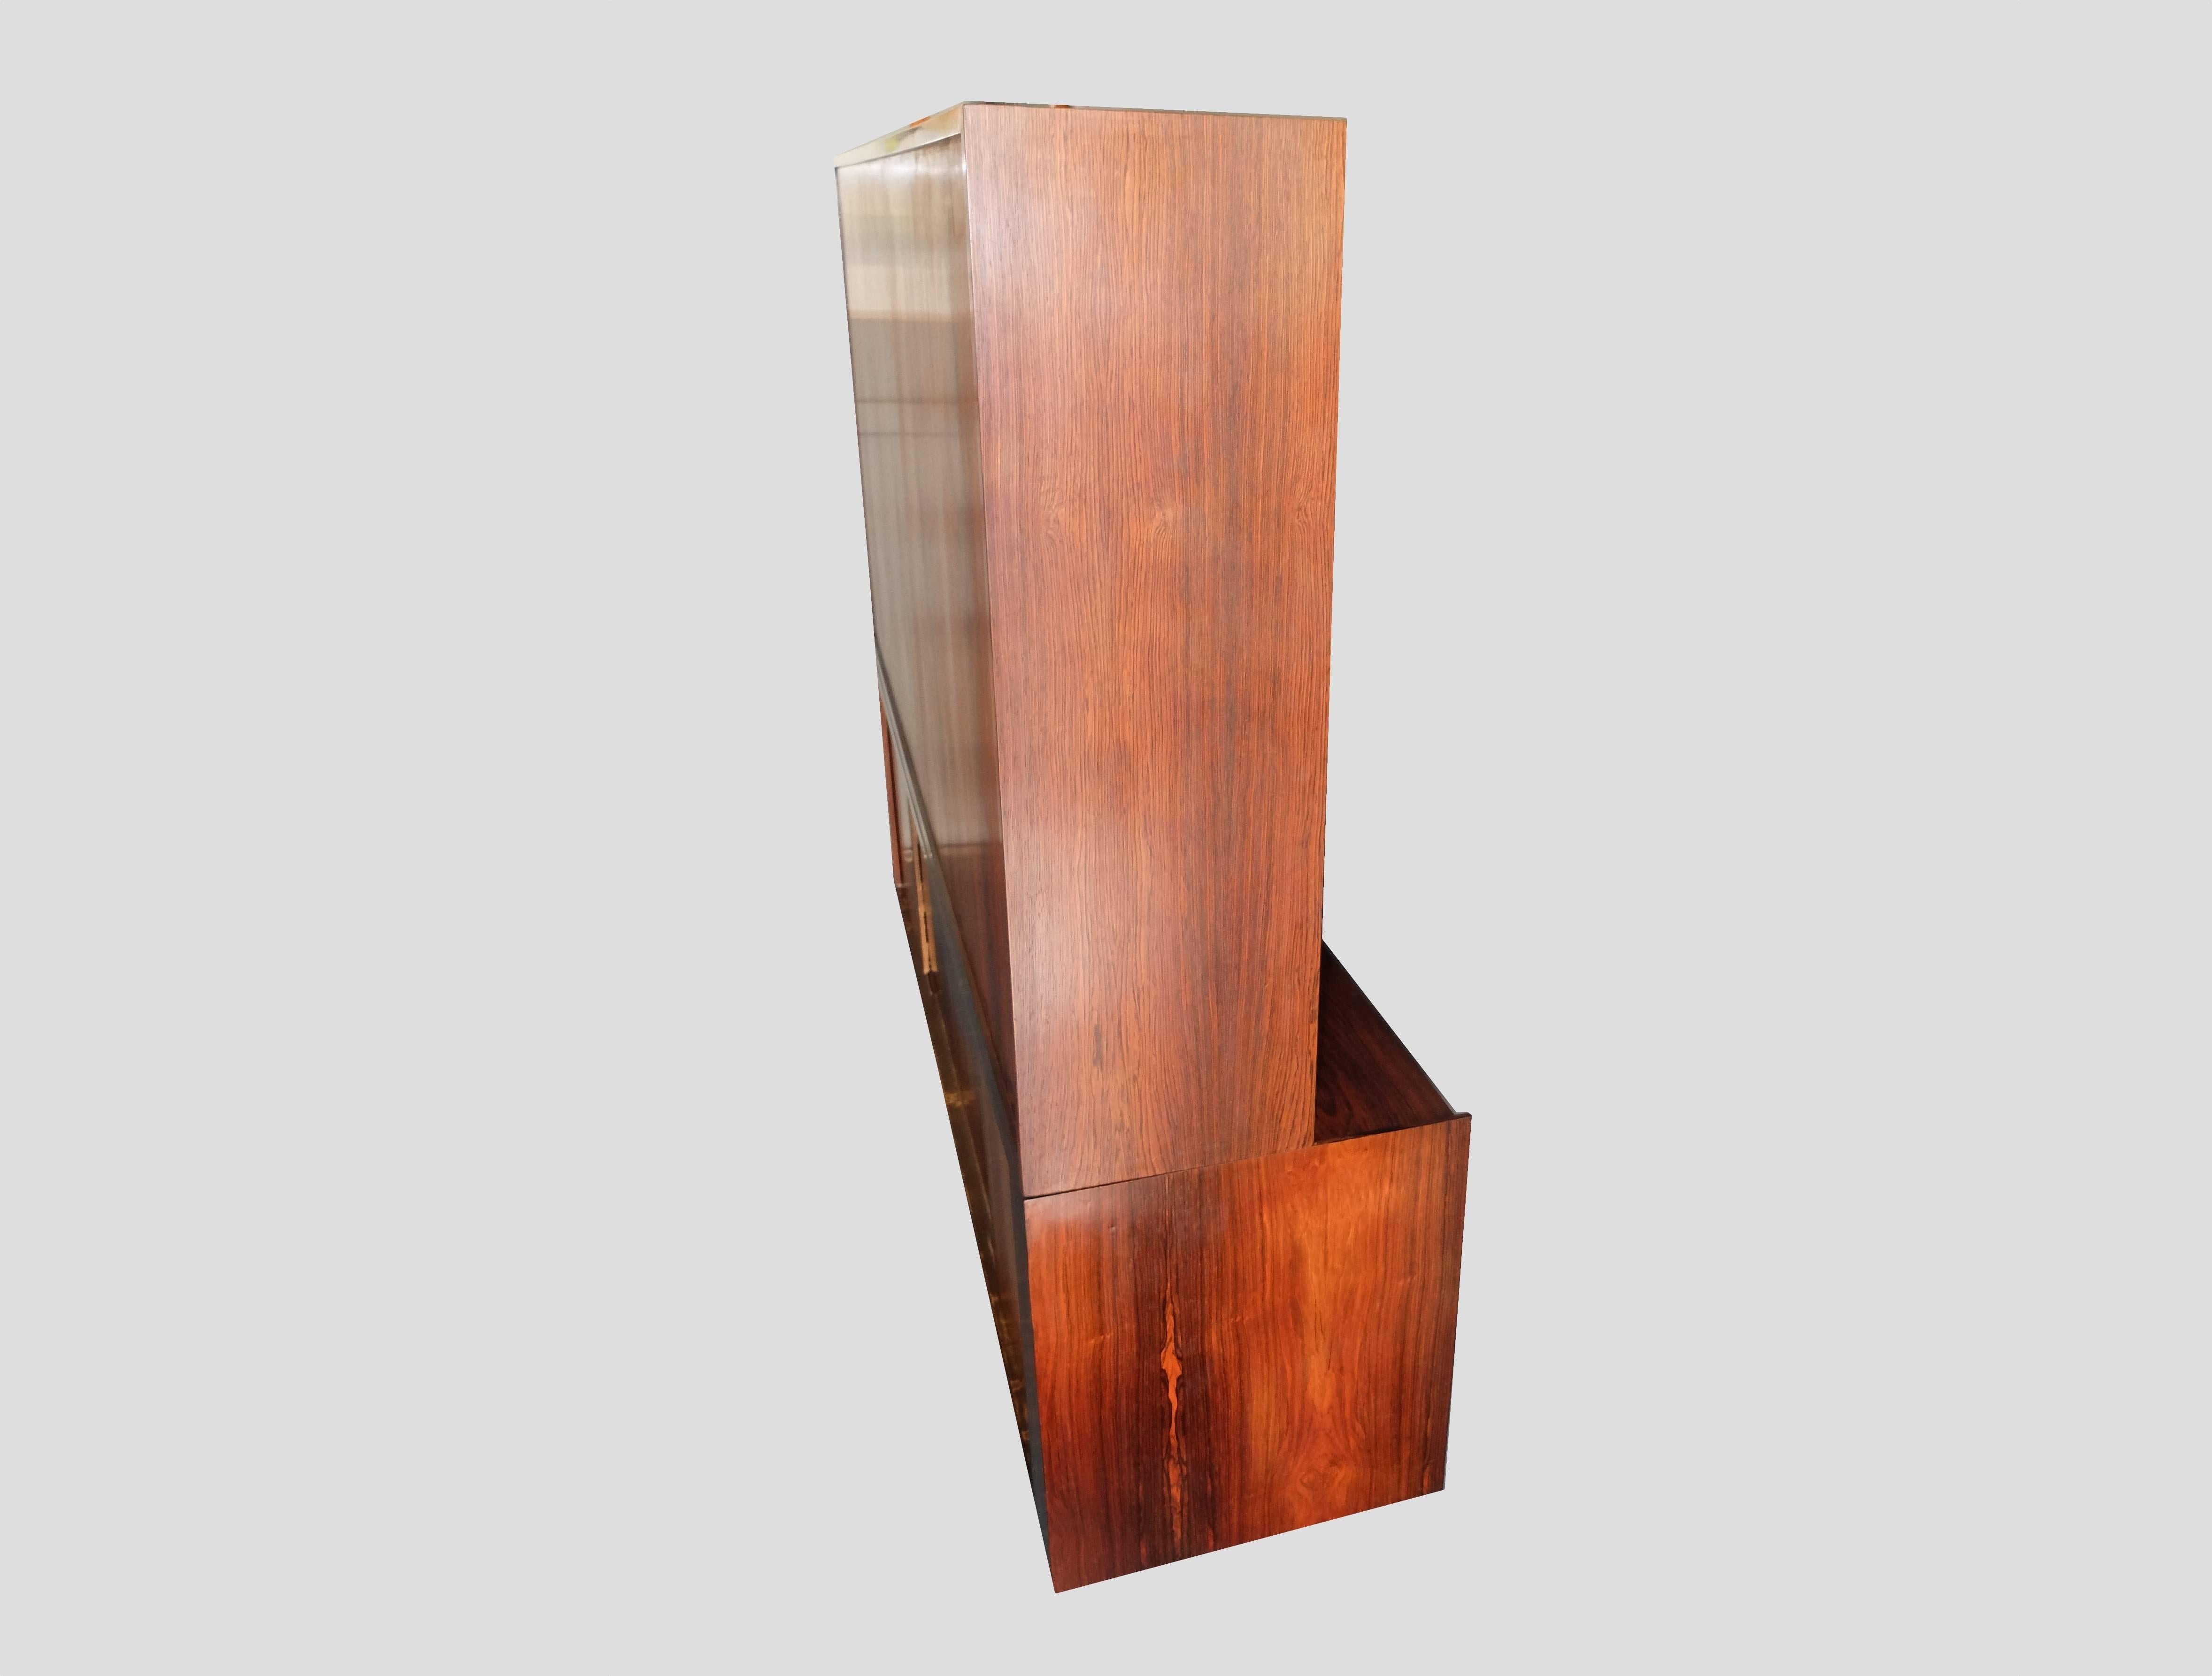 Hardwood Ib Kofod Larsen Rosewood Sideboard Credenza Bookcase Danish 1960s  For Sale